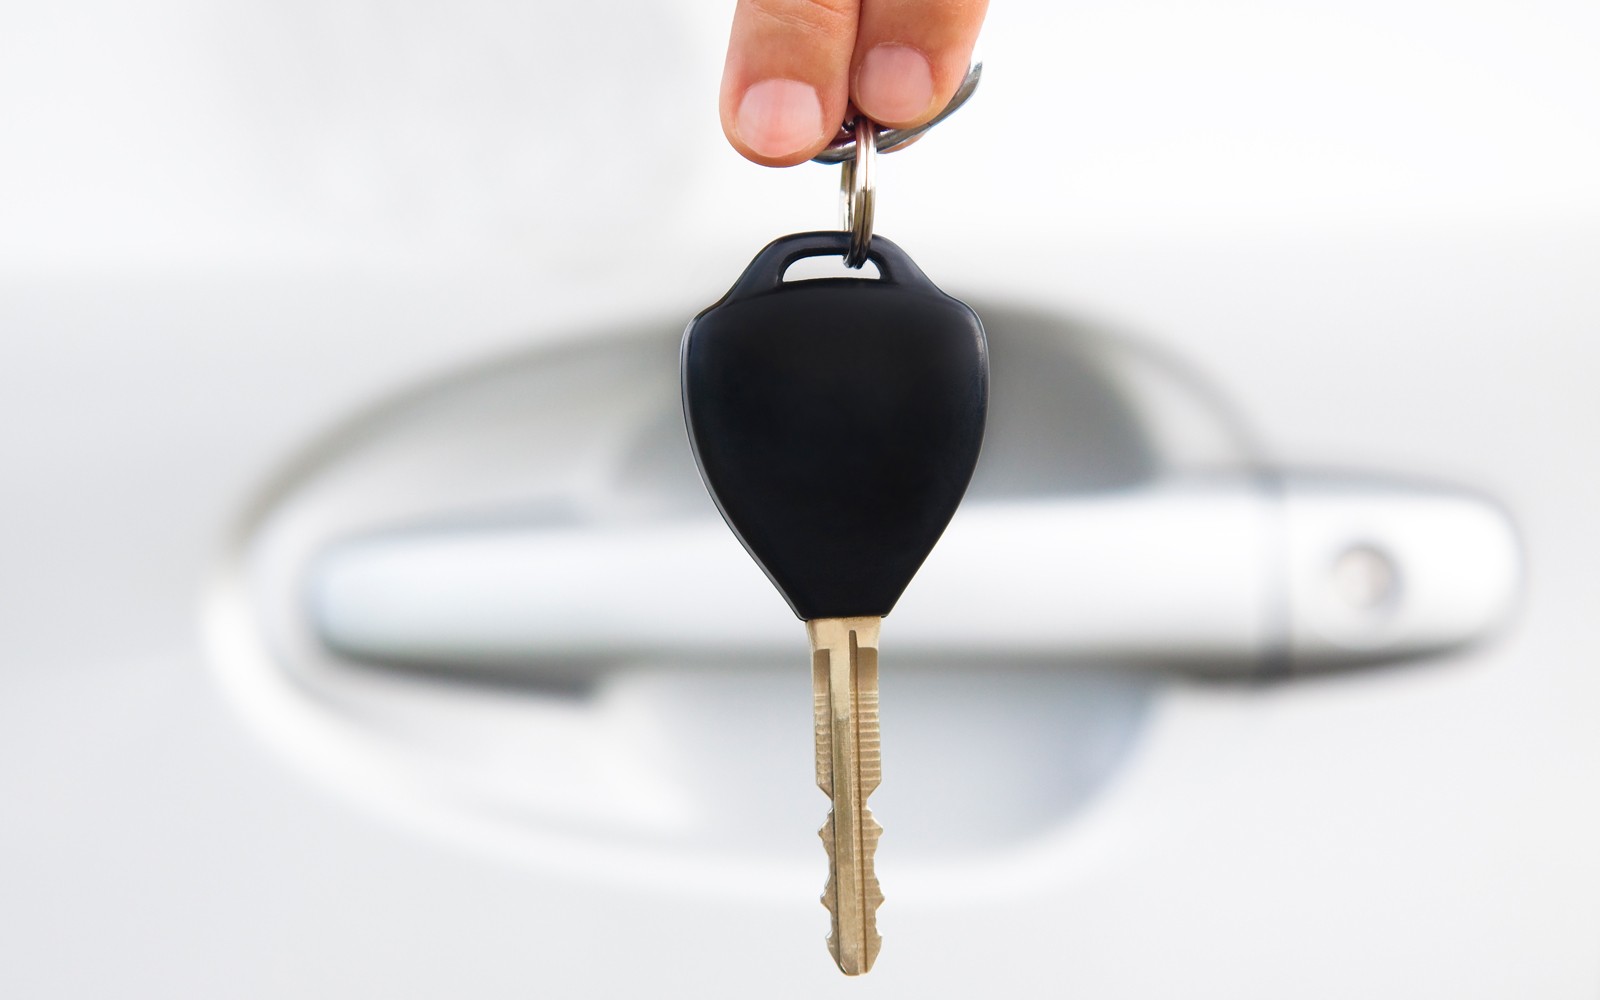 hand holding car key before door of car